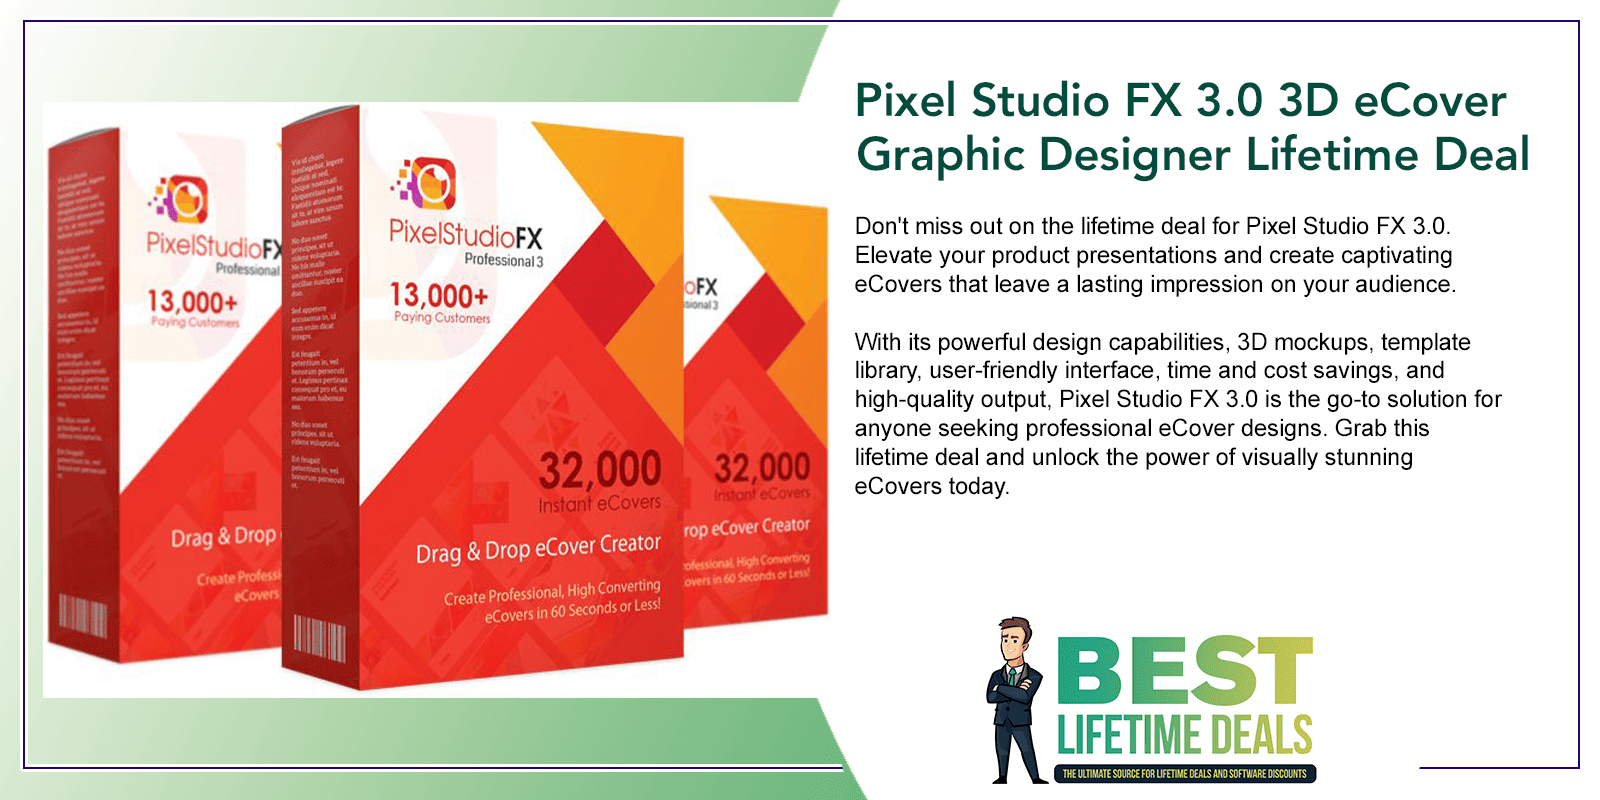 Pixel Studio FX 3.0 3D eCover Graphic Designer Lifetime Deal